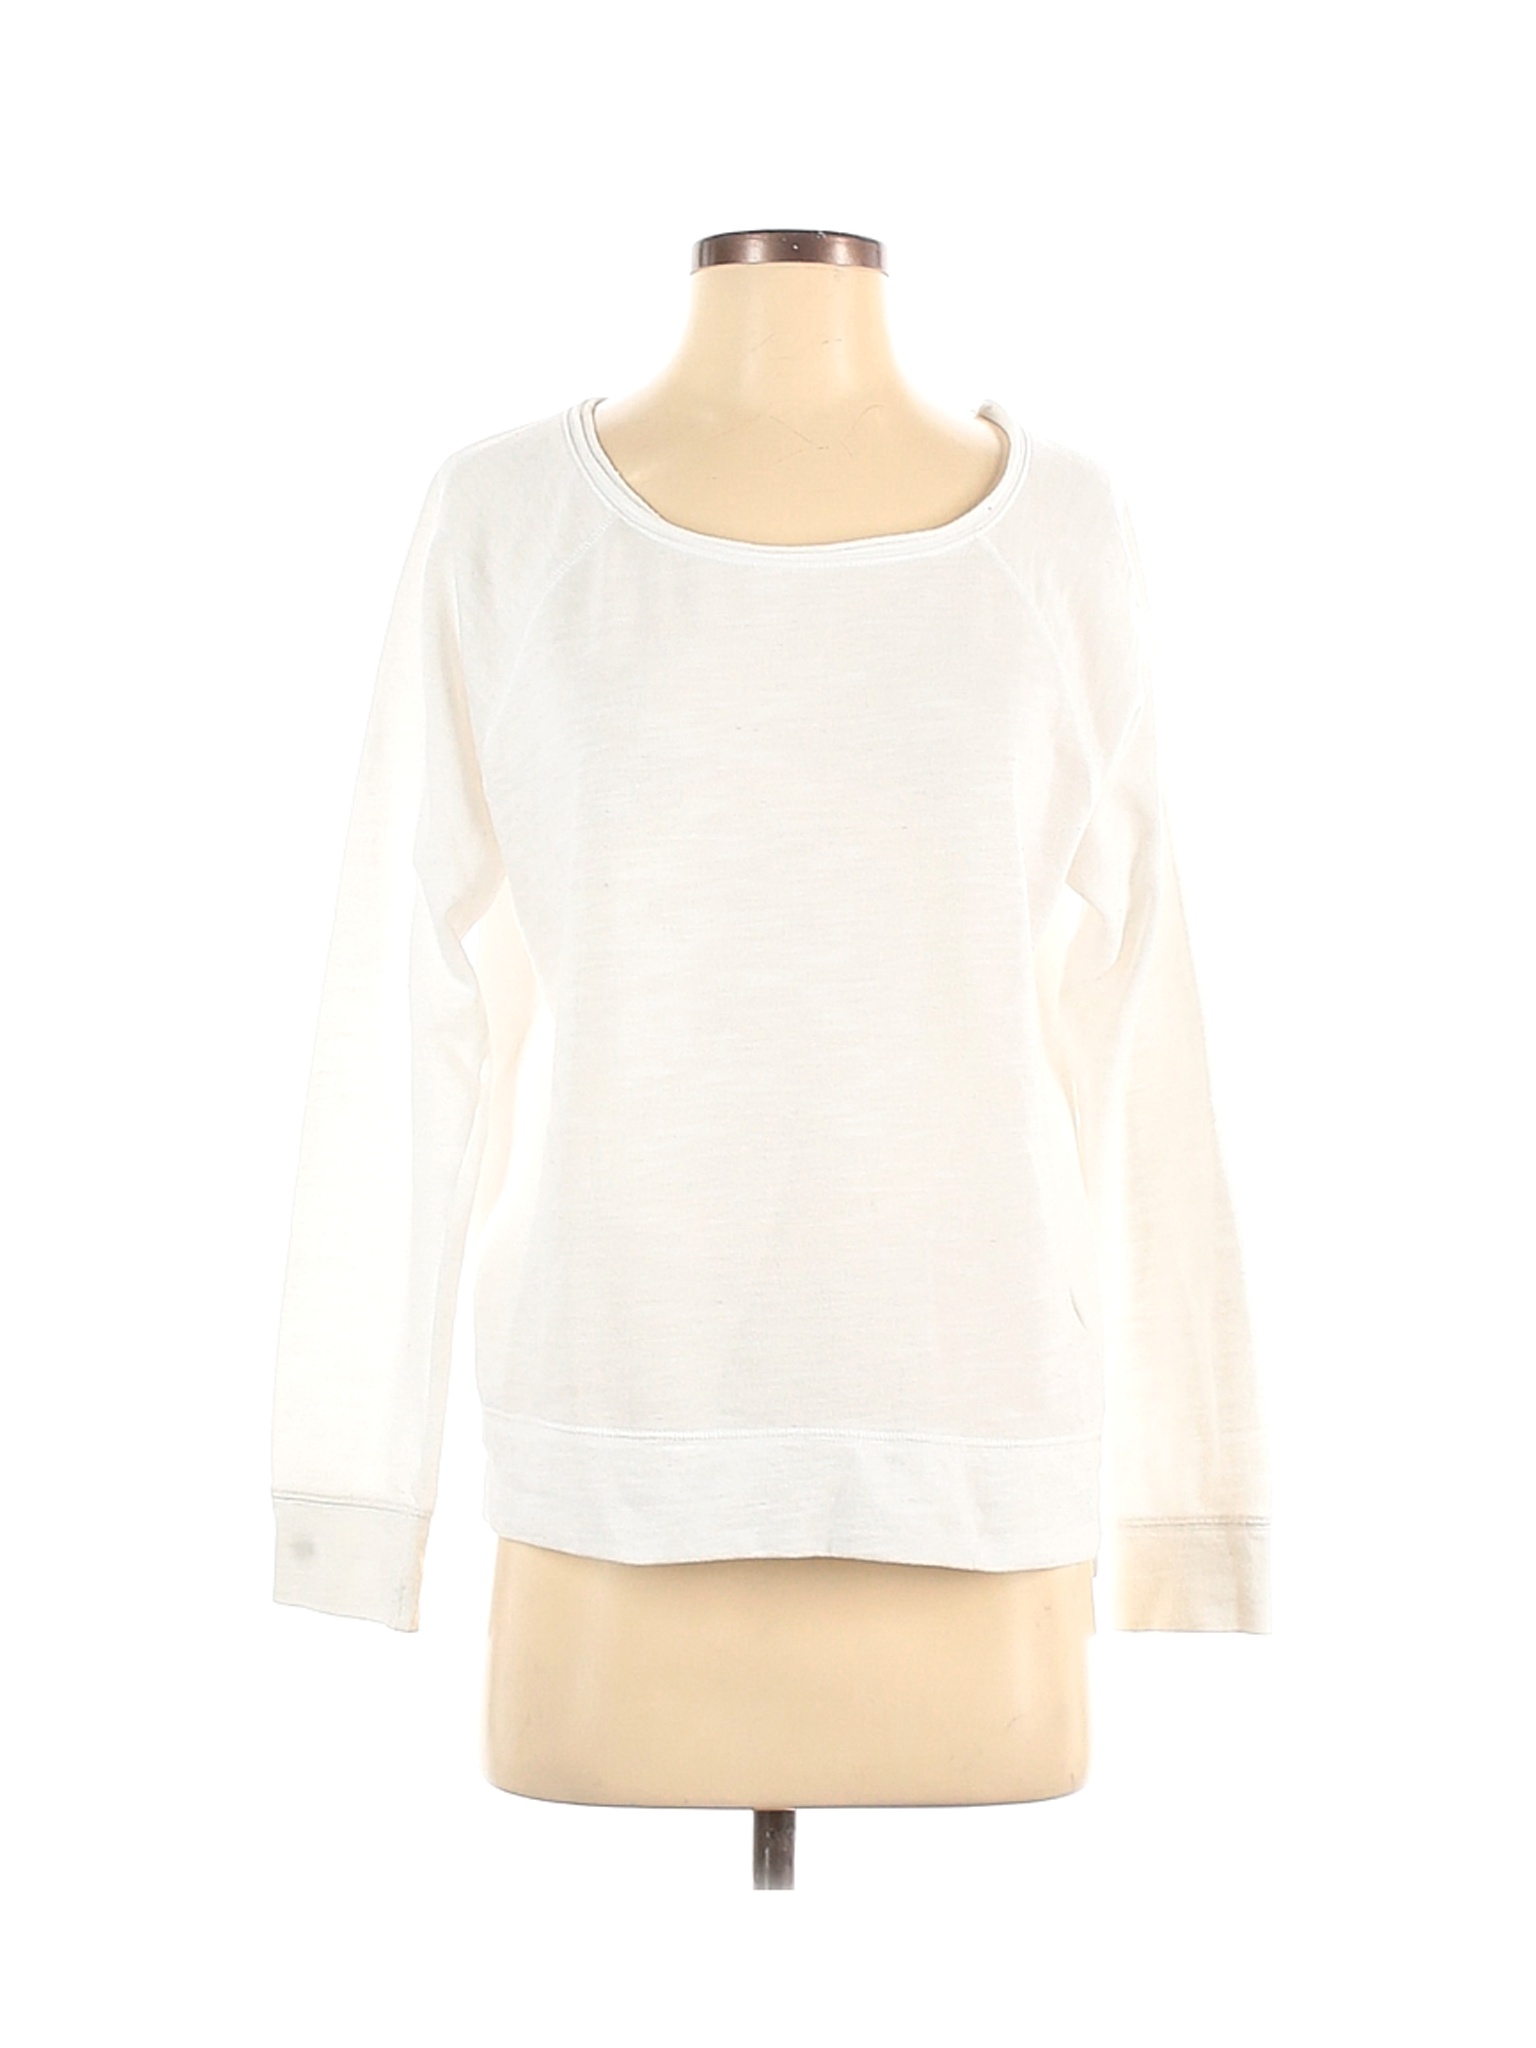 Old Navy Women White Sweatshirt M | eBay